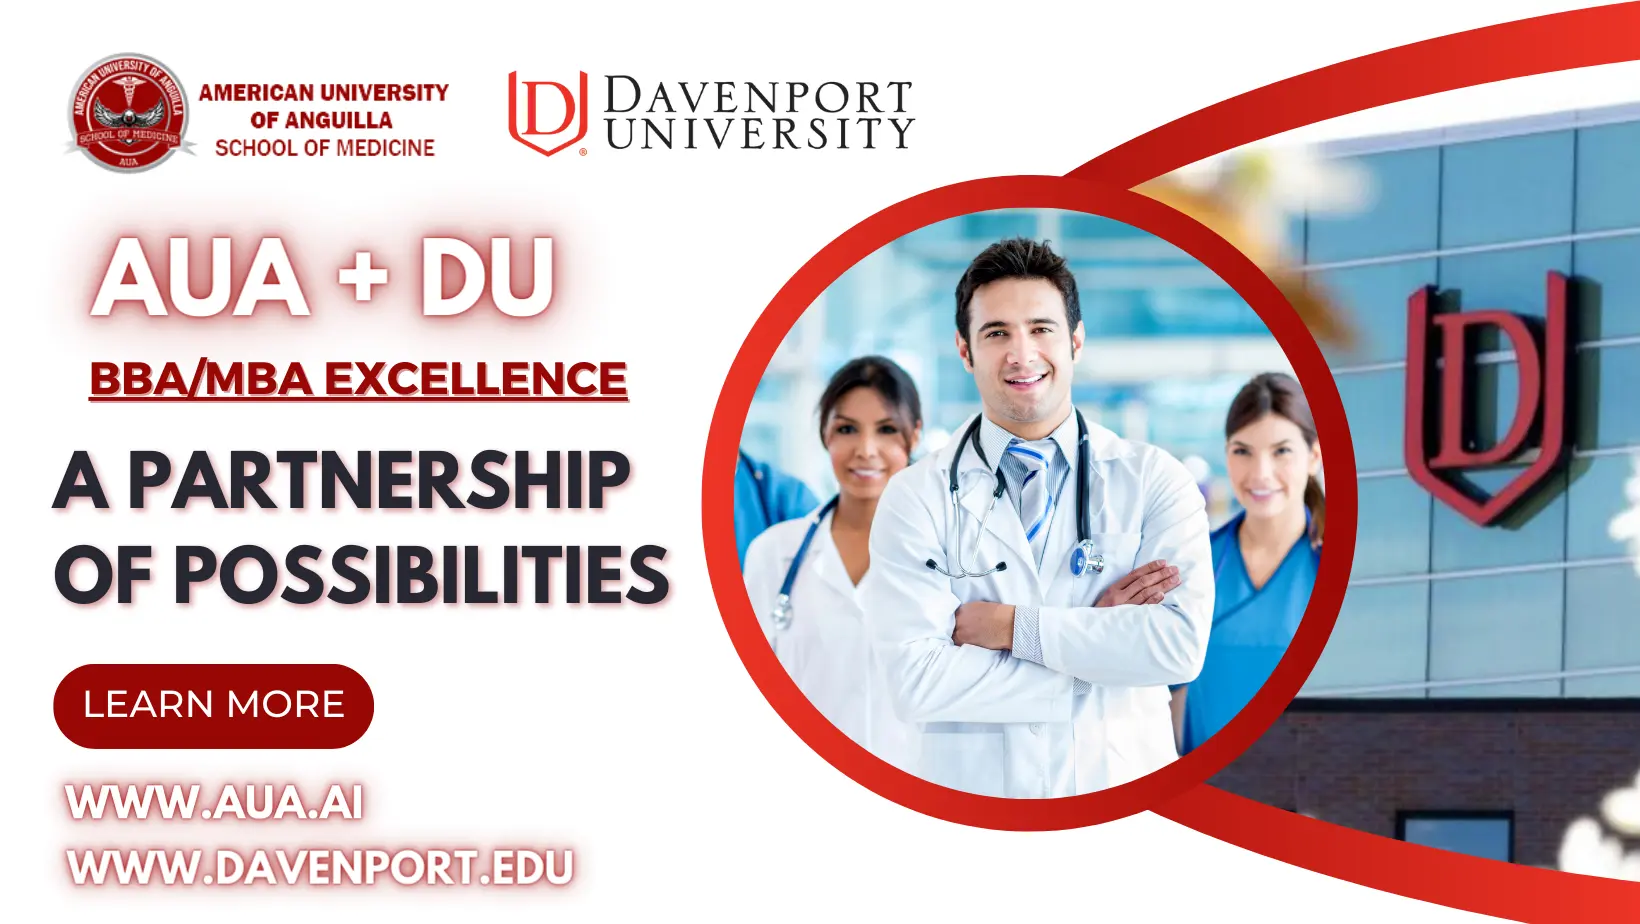 Affiliation with Davenport University